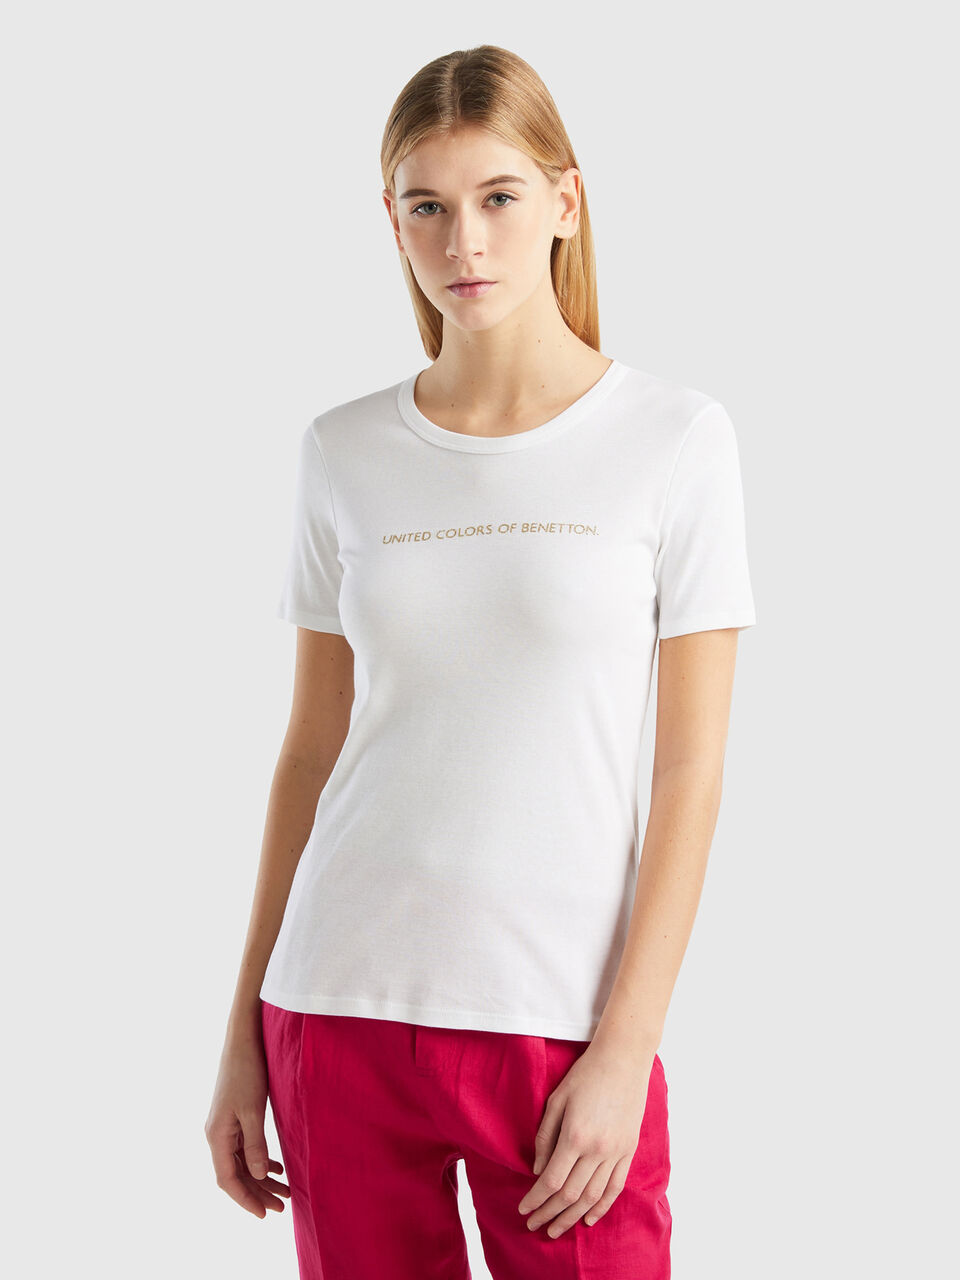 T-shirt in 100% - cotton print White glitter logo | Benetton with